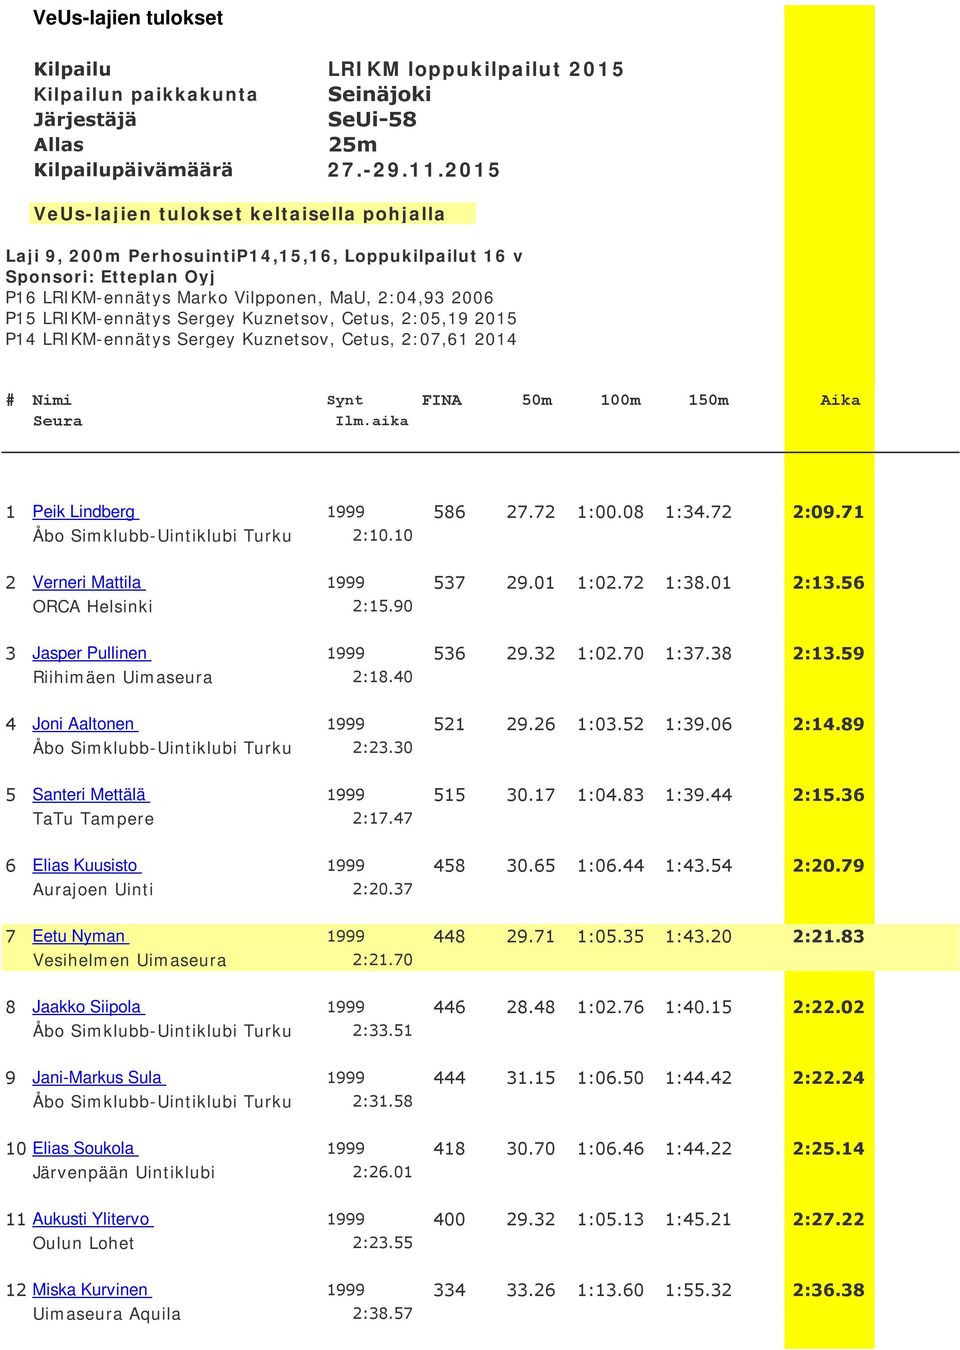 Sergey Kuznetsov, Cetus, 2:05,19 2015 P14 LRIKM-ennätys Sergey Kuznetsov, Cetus, 2:07,61 2014 # Nimi Synt FINA 50m 100m 150m Aika 1 Peik Lindberg 1999 586 27.72 1:00.08 1:34.72 2:09.